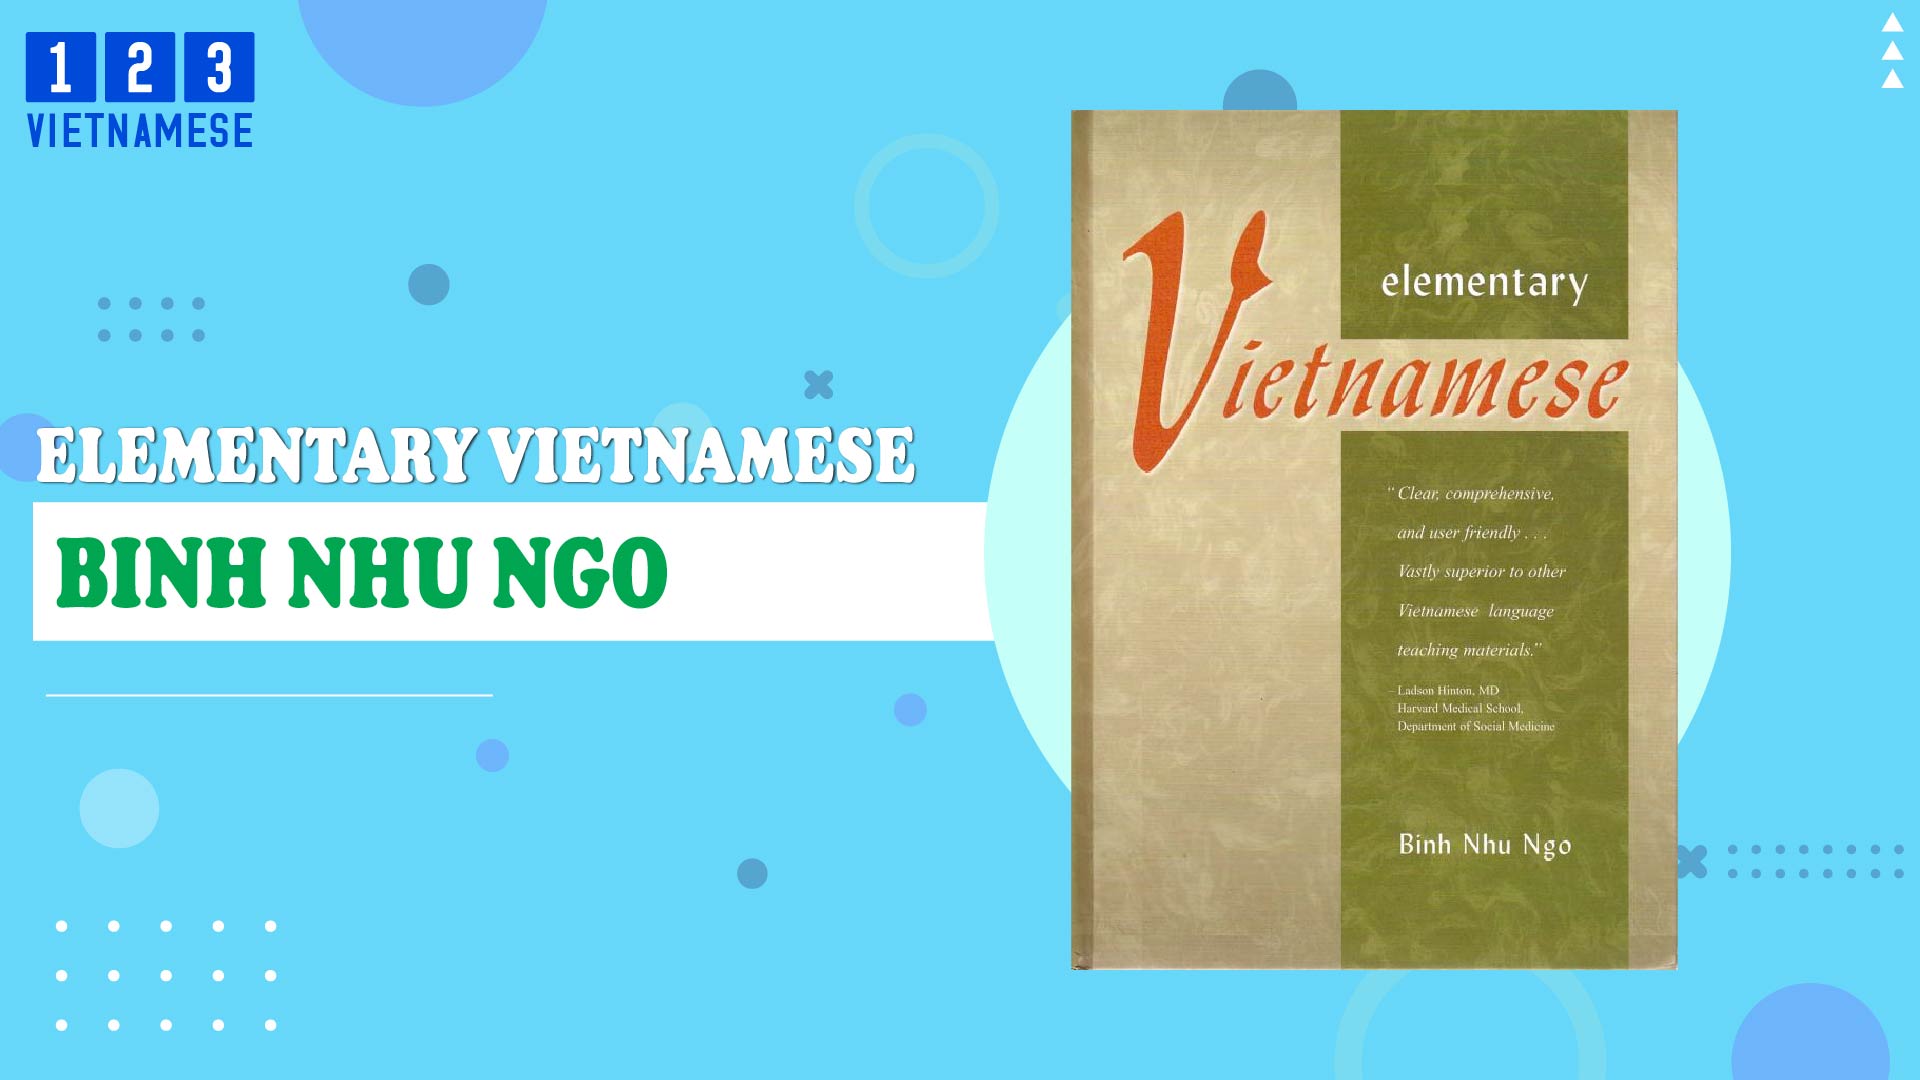 Elementary Vietnamese - Binh Nhu Ngo [Learning Vietnamese Book]